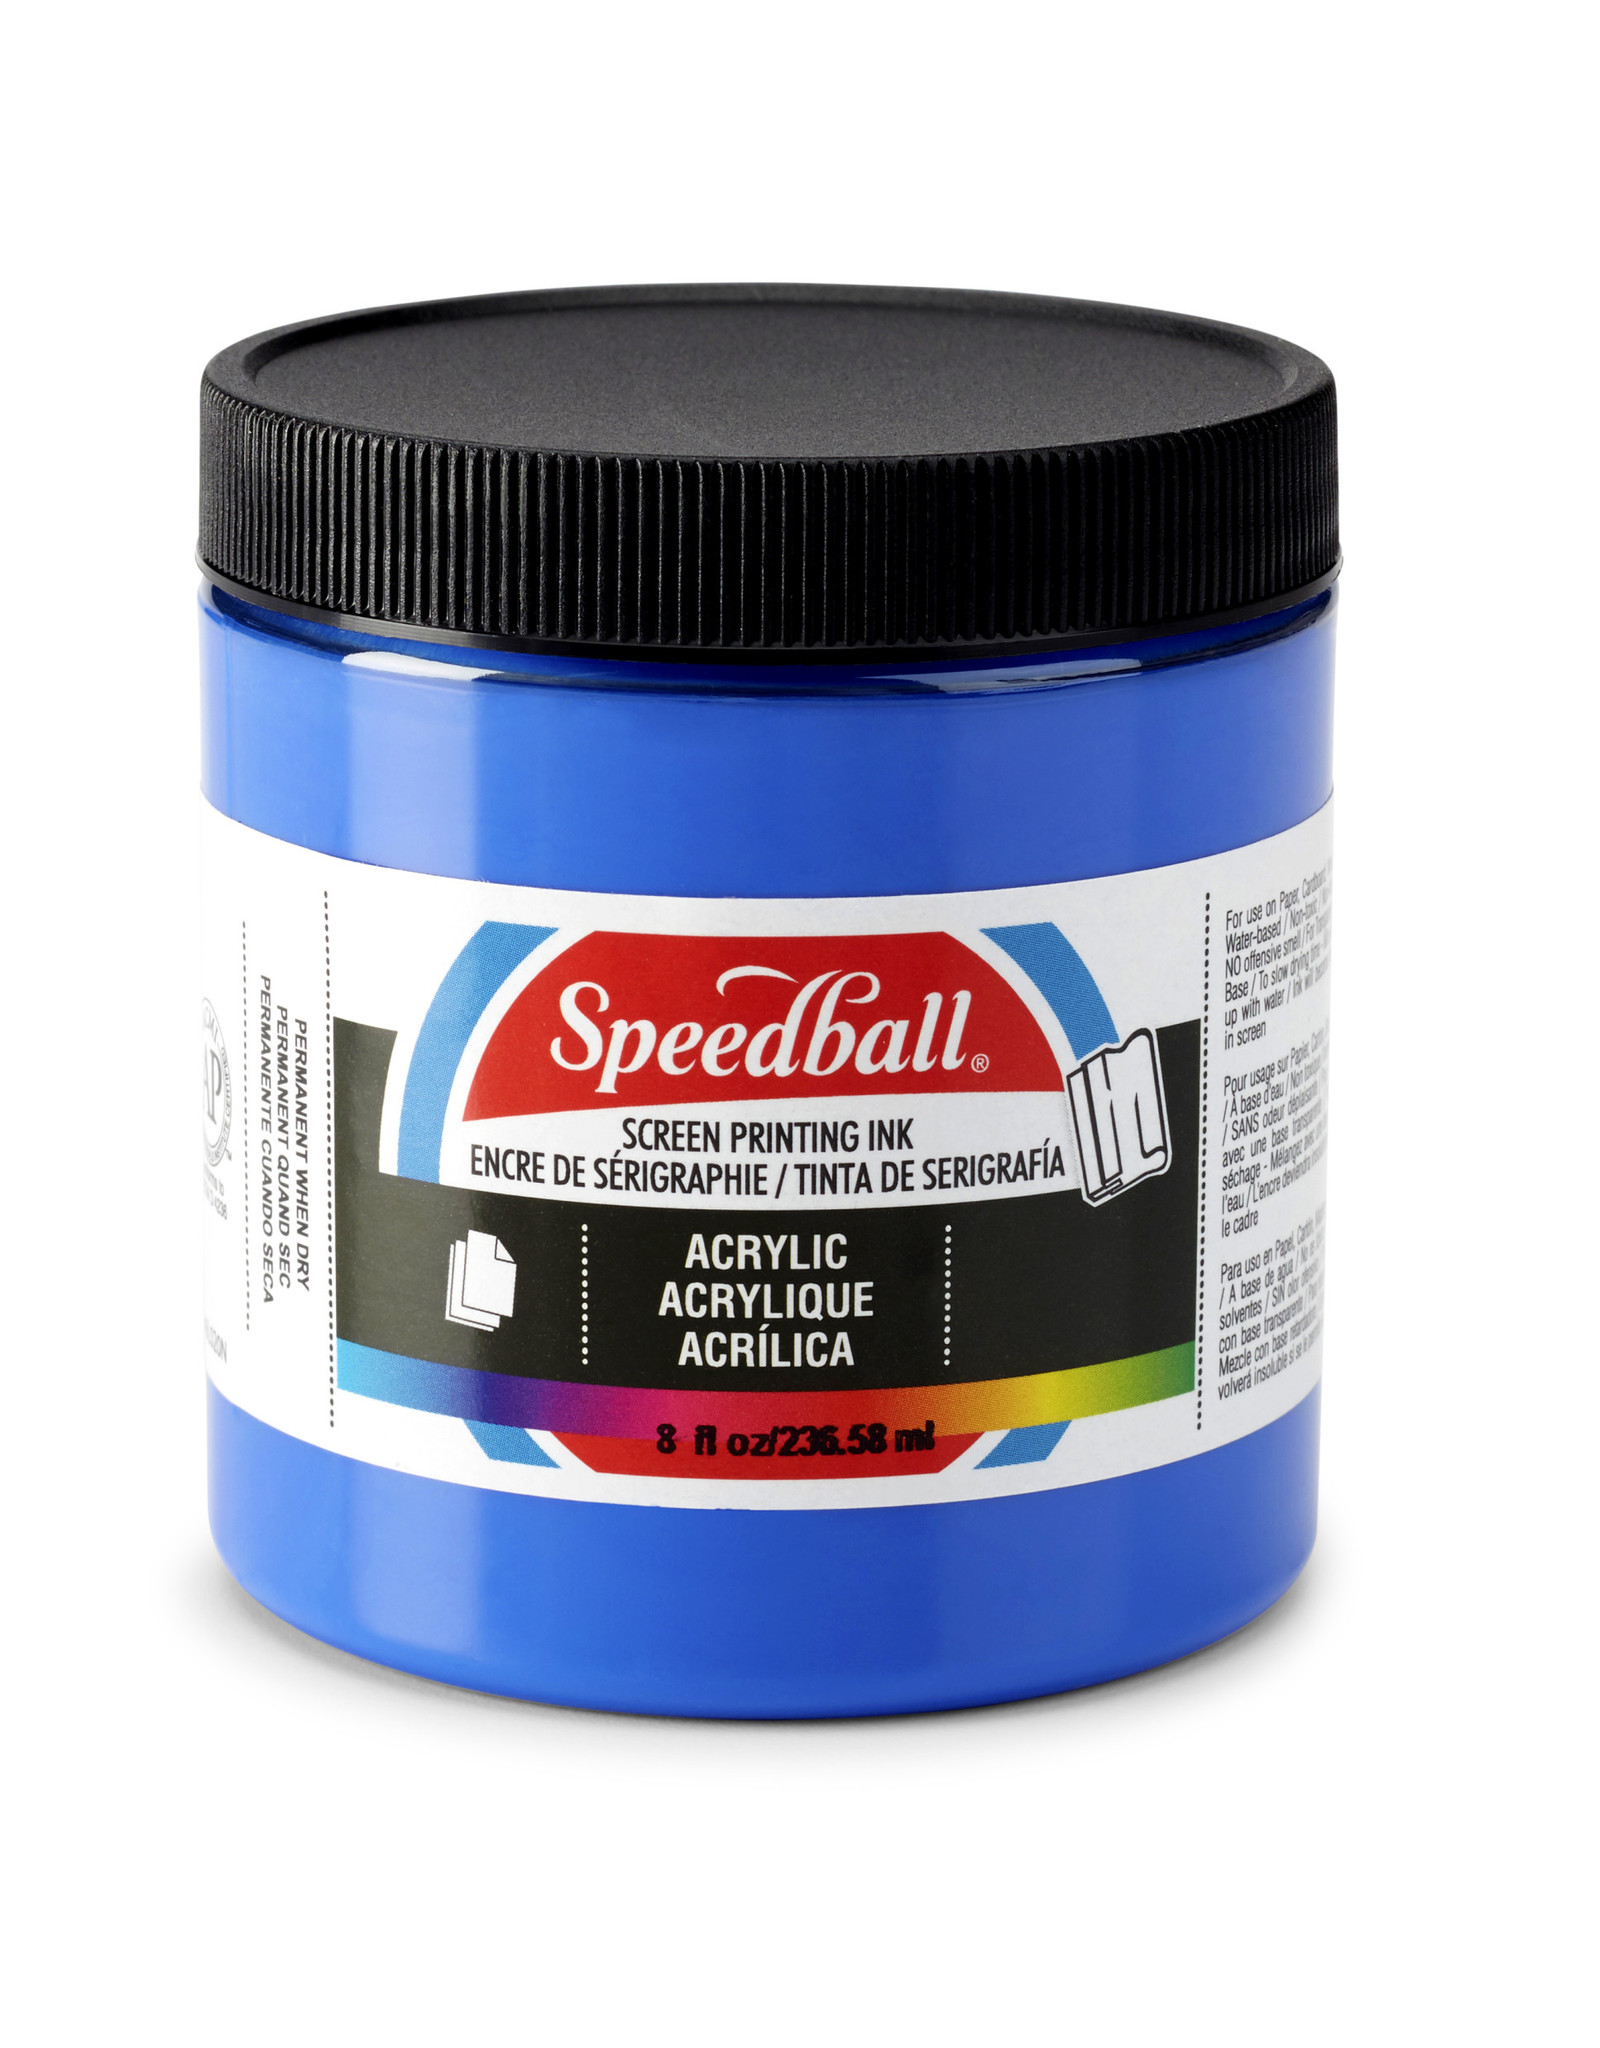 SPEEDBALL ART PRODUCTS Speedball Acrylic Screen Printing Ink, Ultramarine Blue, 8oz